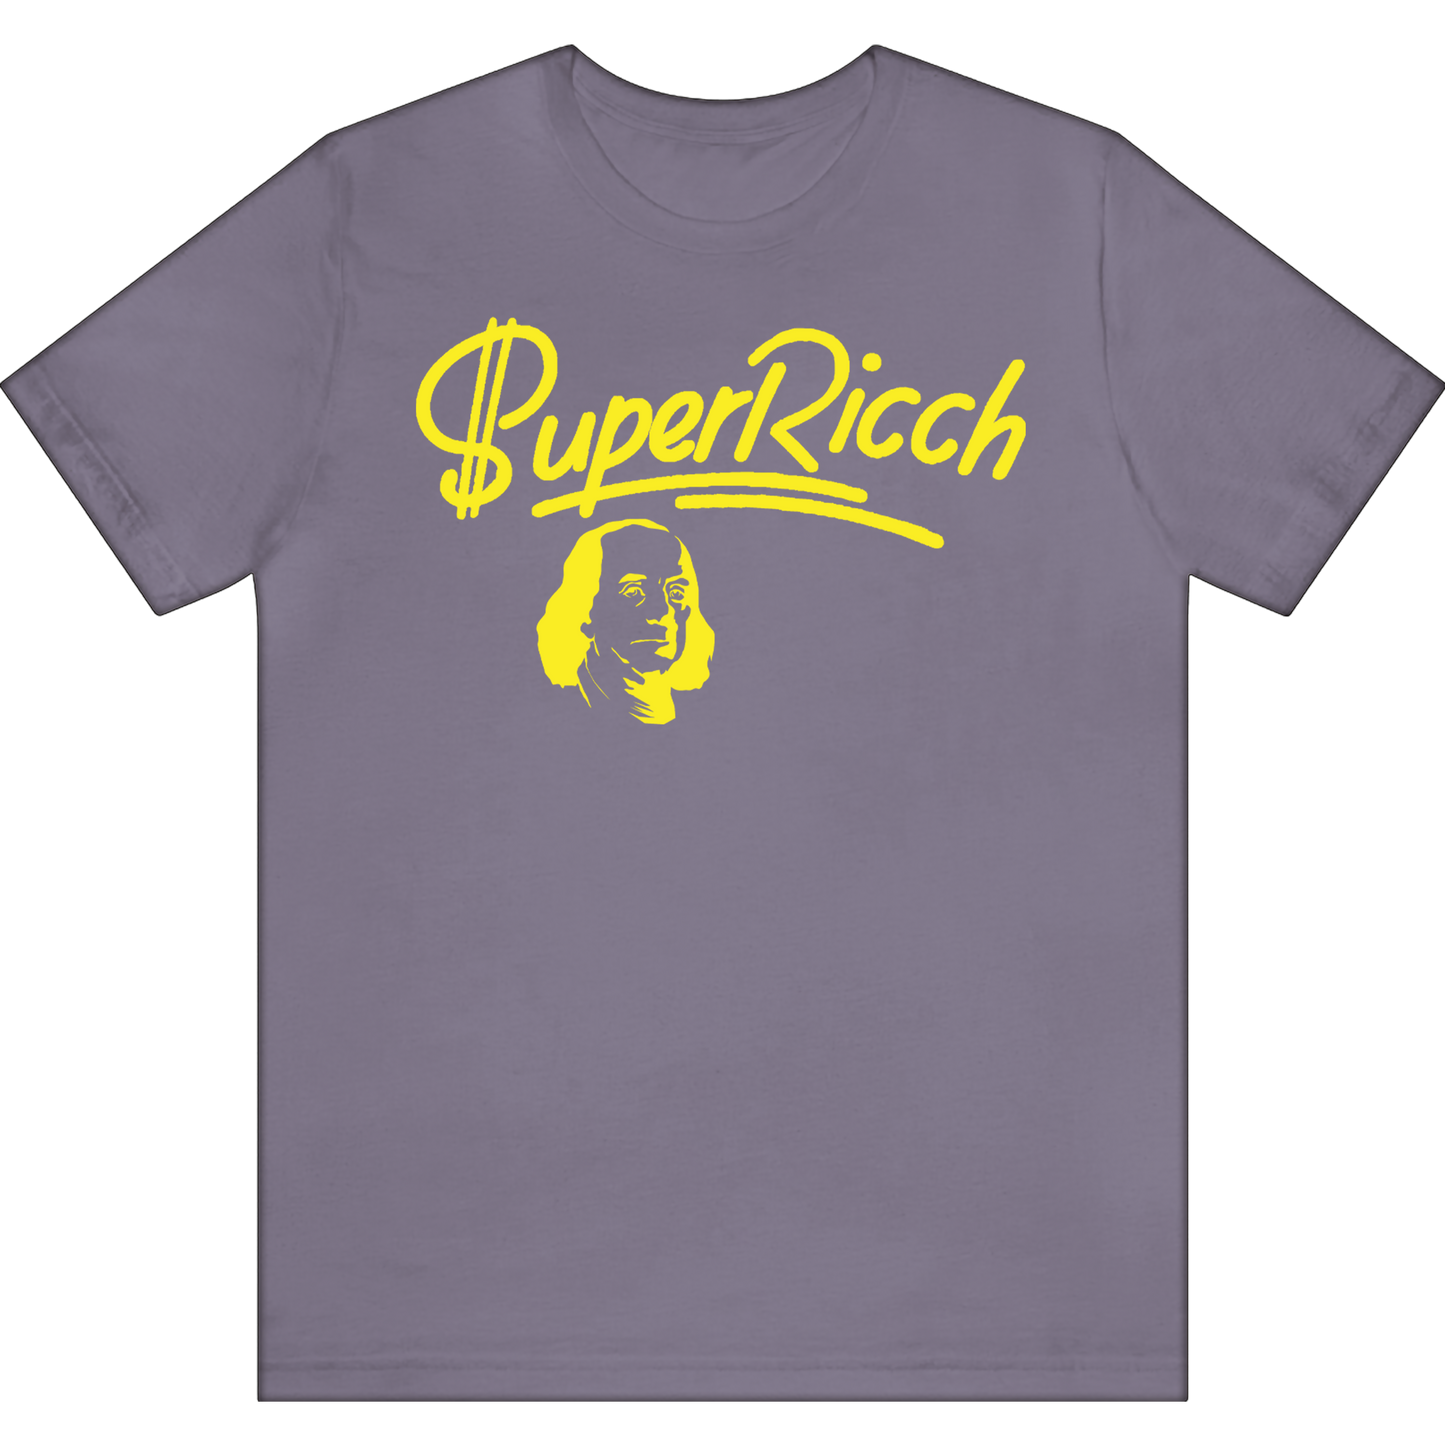 "Super RICCH"